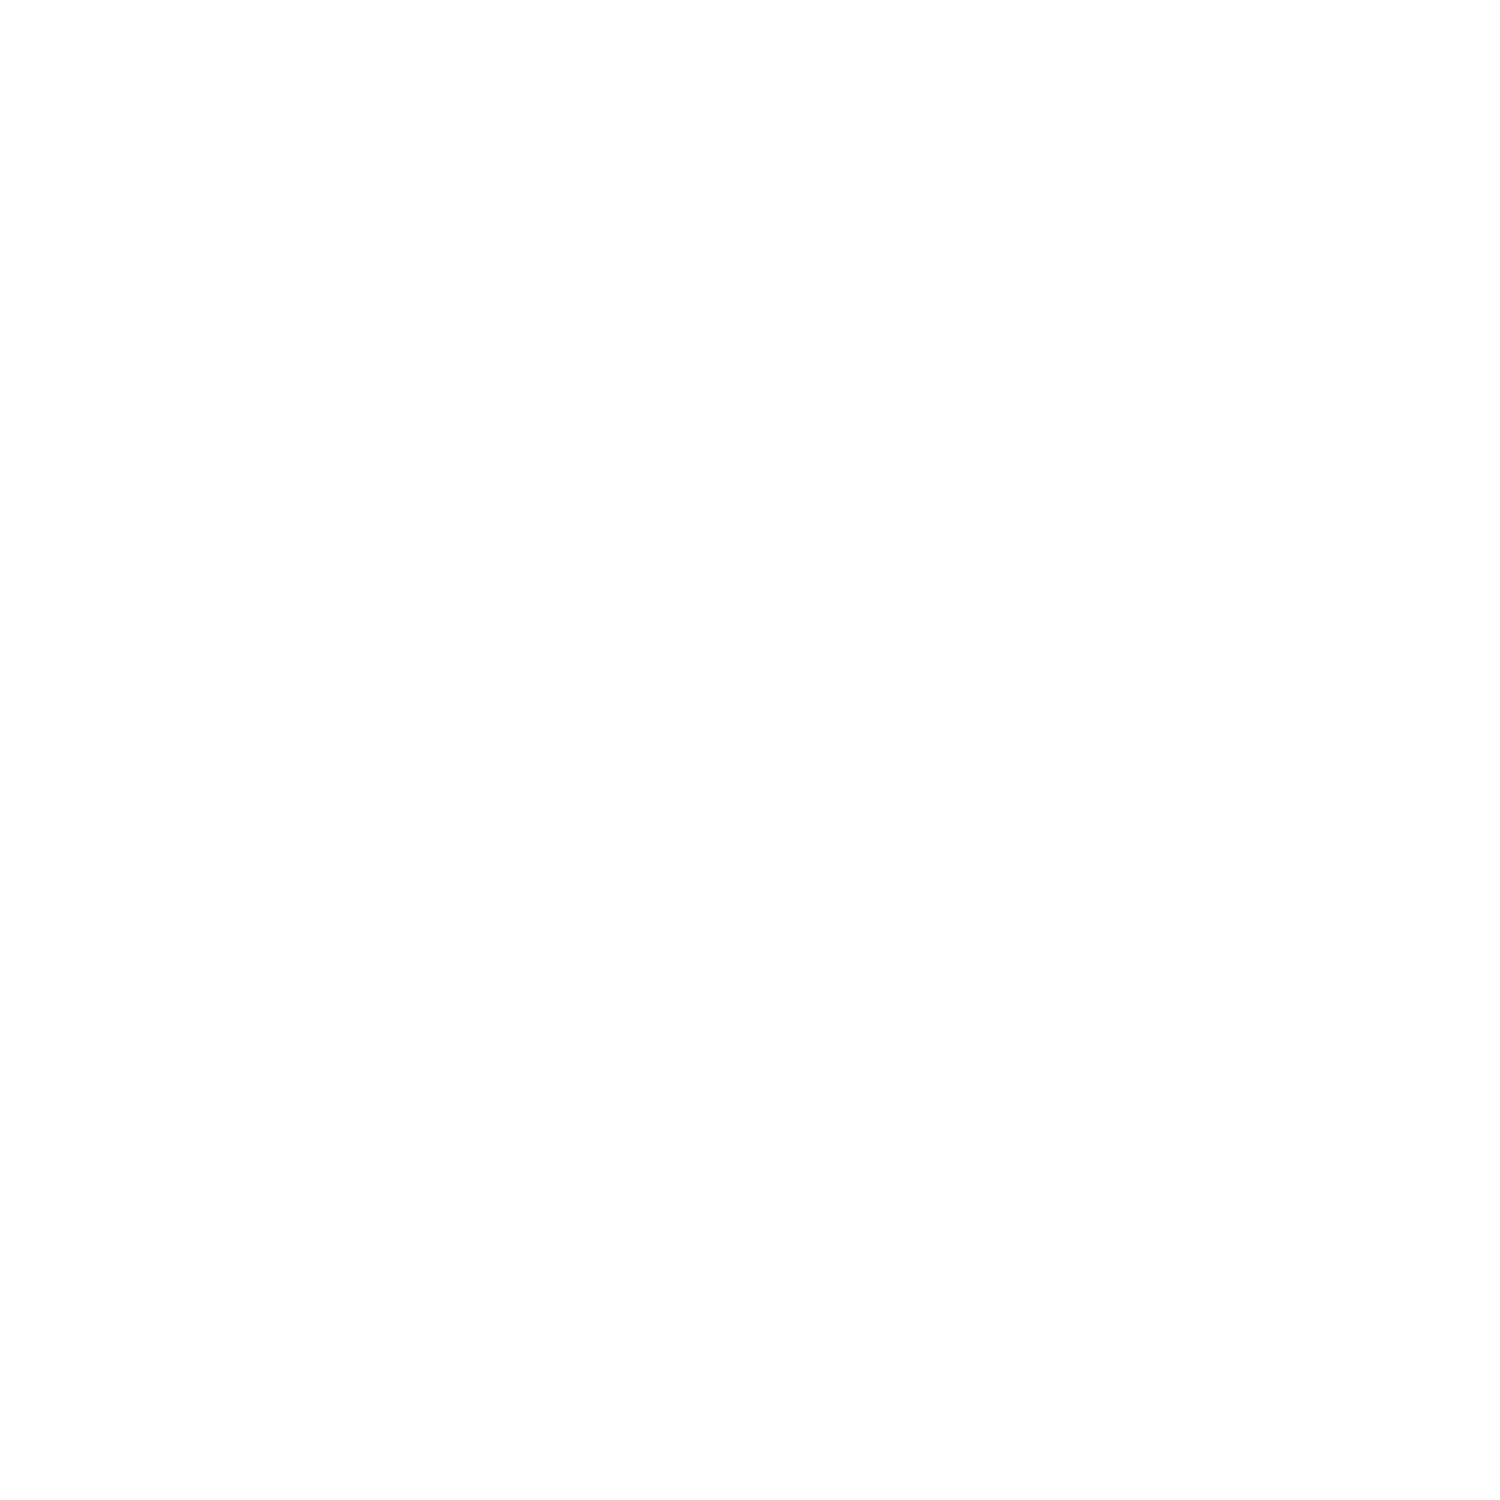 London Diocesan Board for Schools